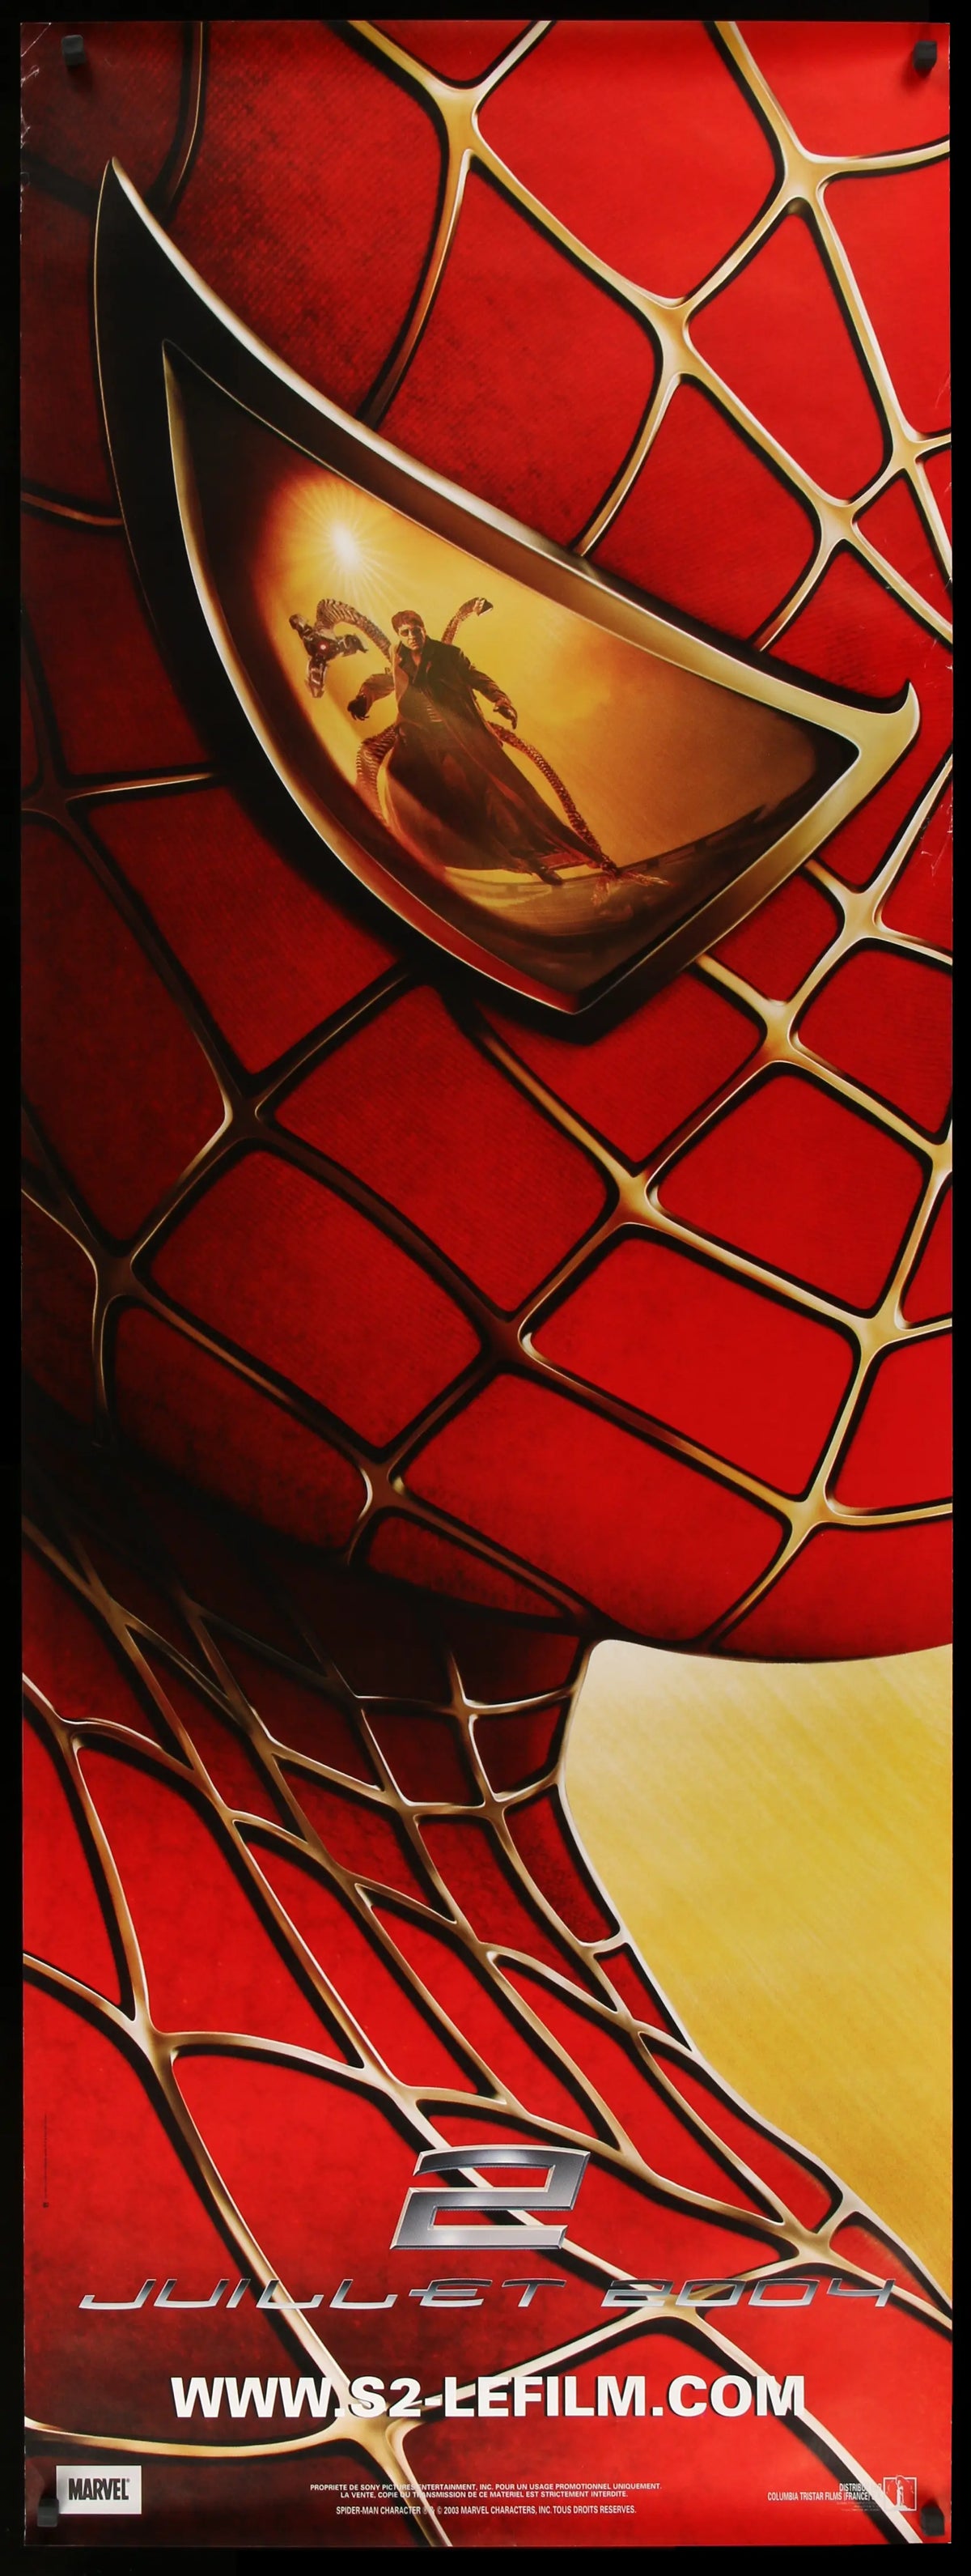 Spider-Man II (2004) original movie poster for sale at Original Film Art